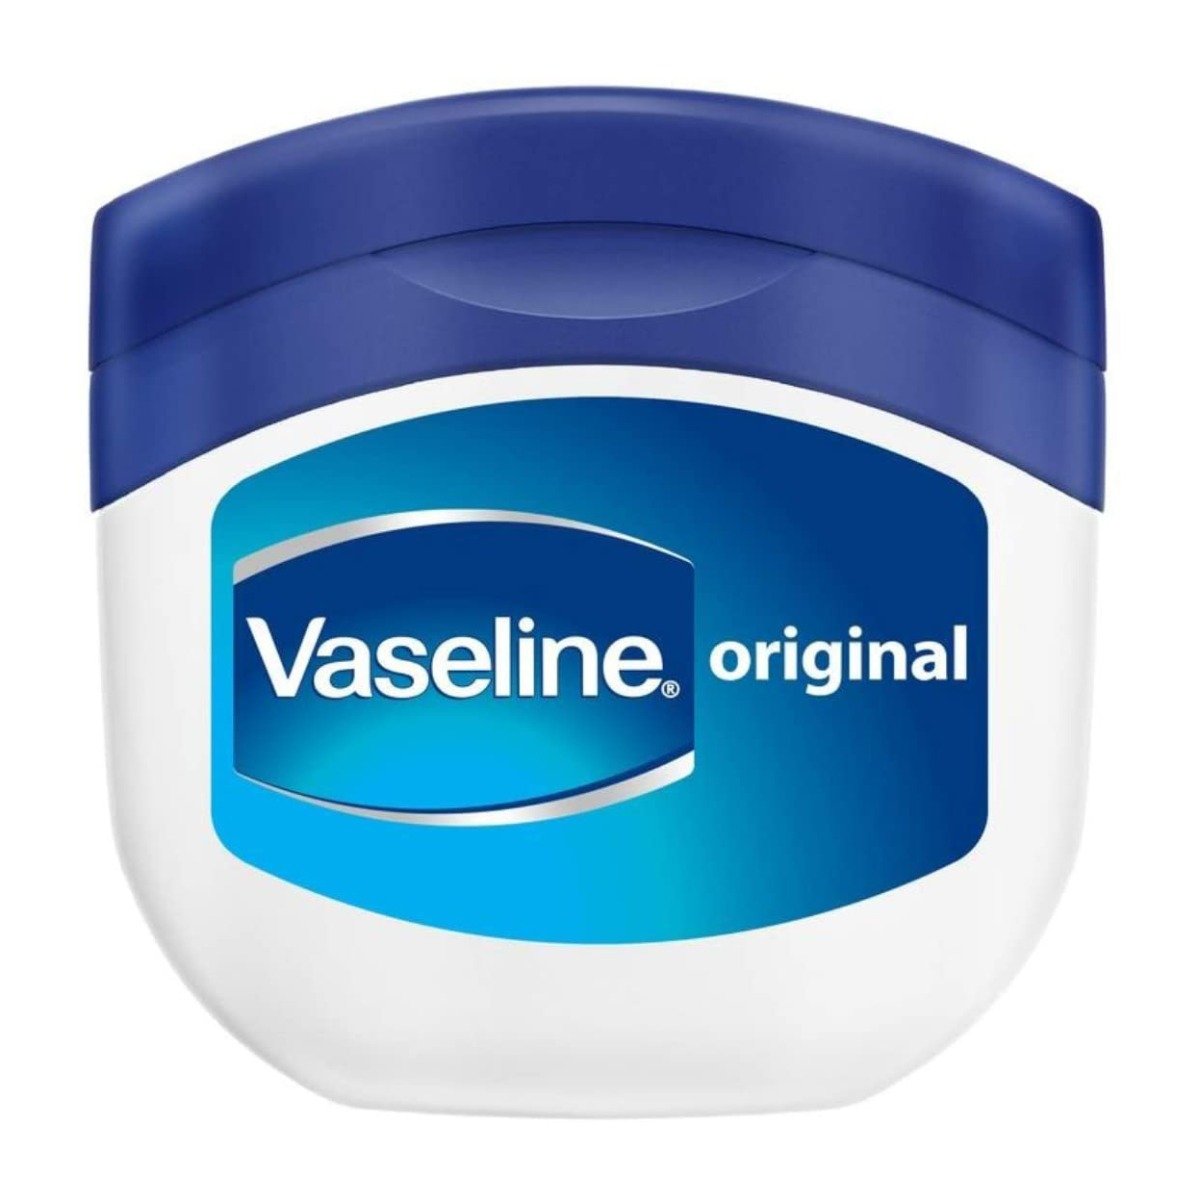 Vaseline Petroleum Jelly Original - Bloom Pharmacy